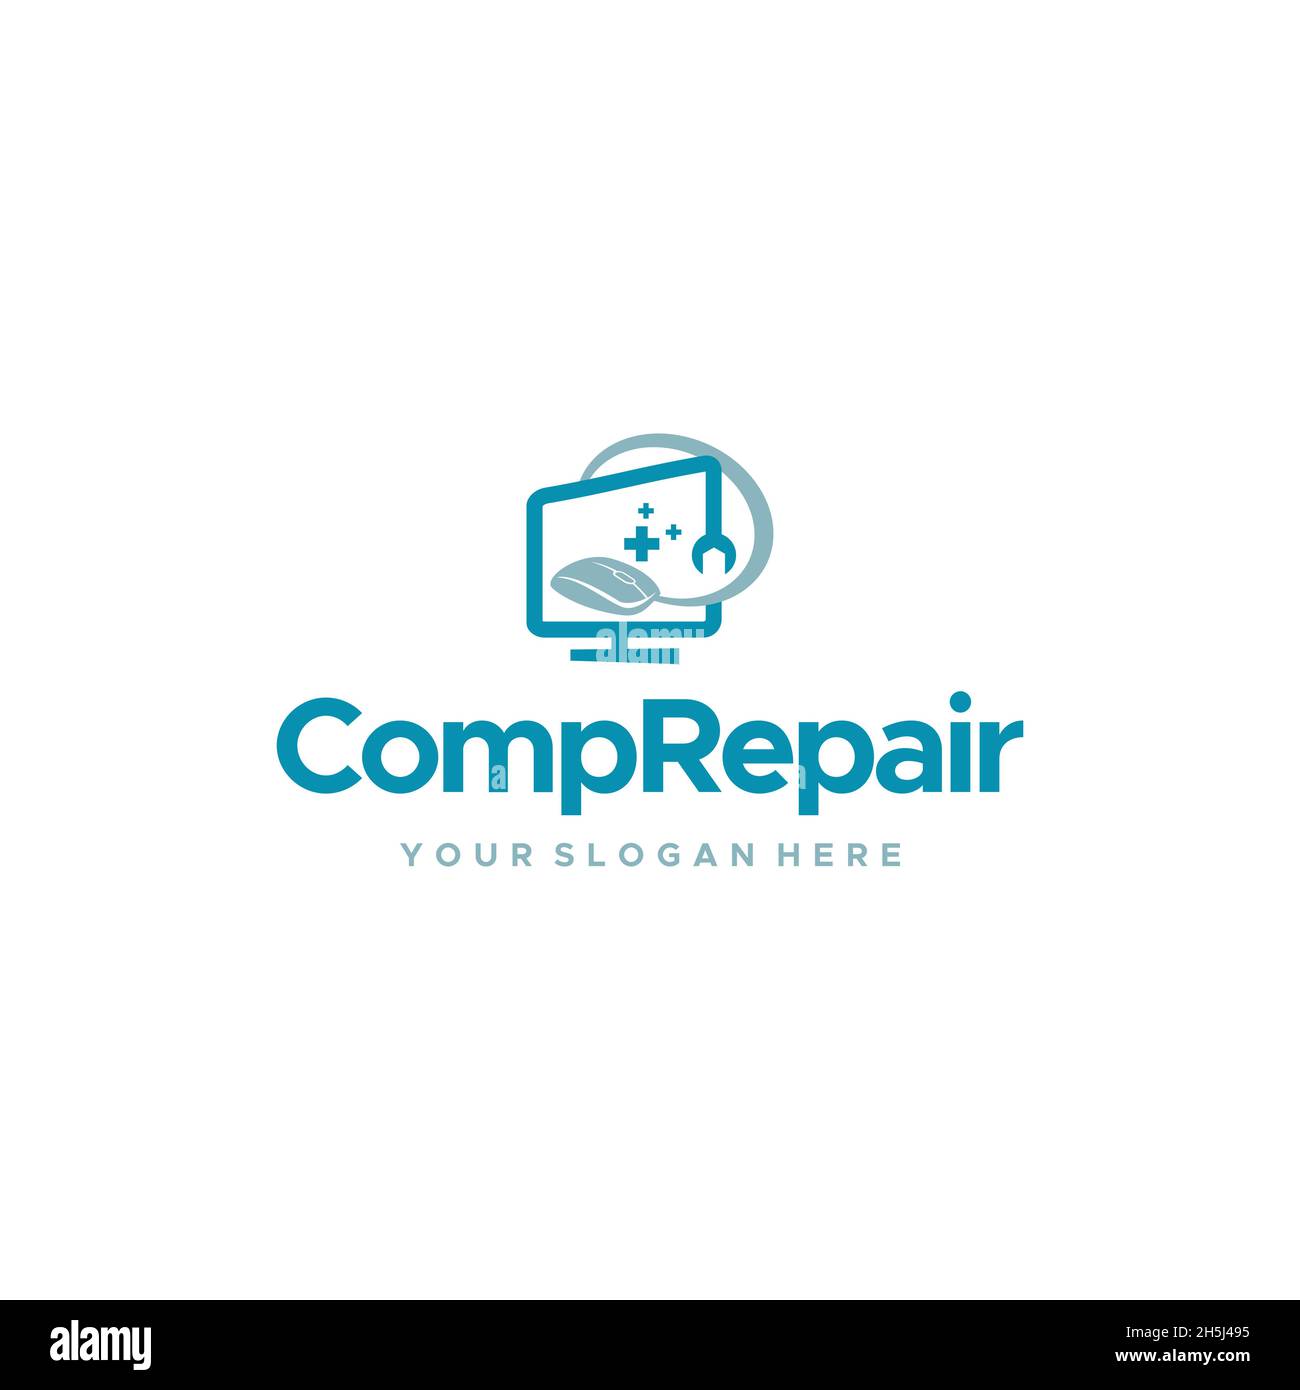 Computer Overhauls (@compoverhauls) / X